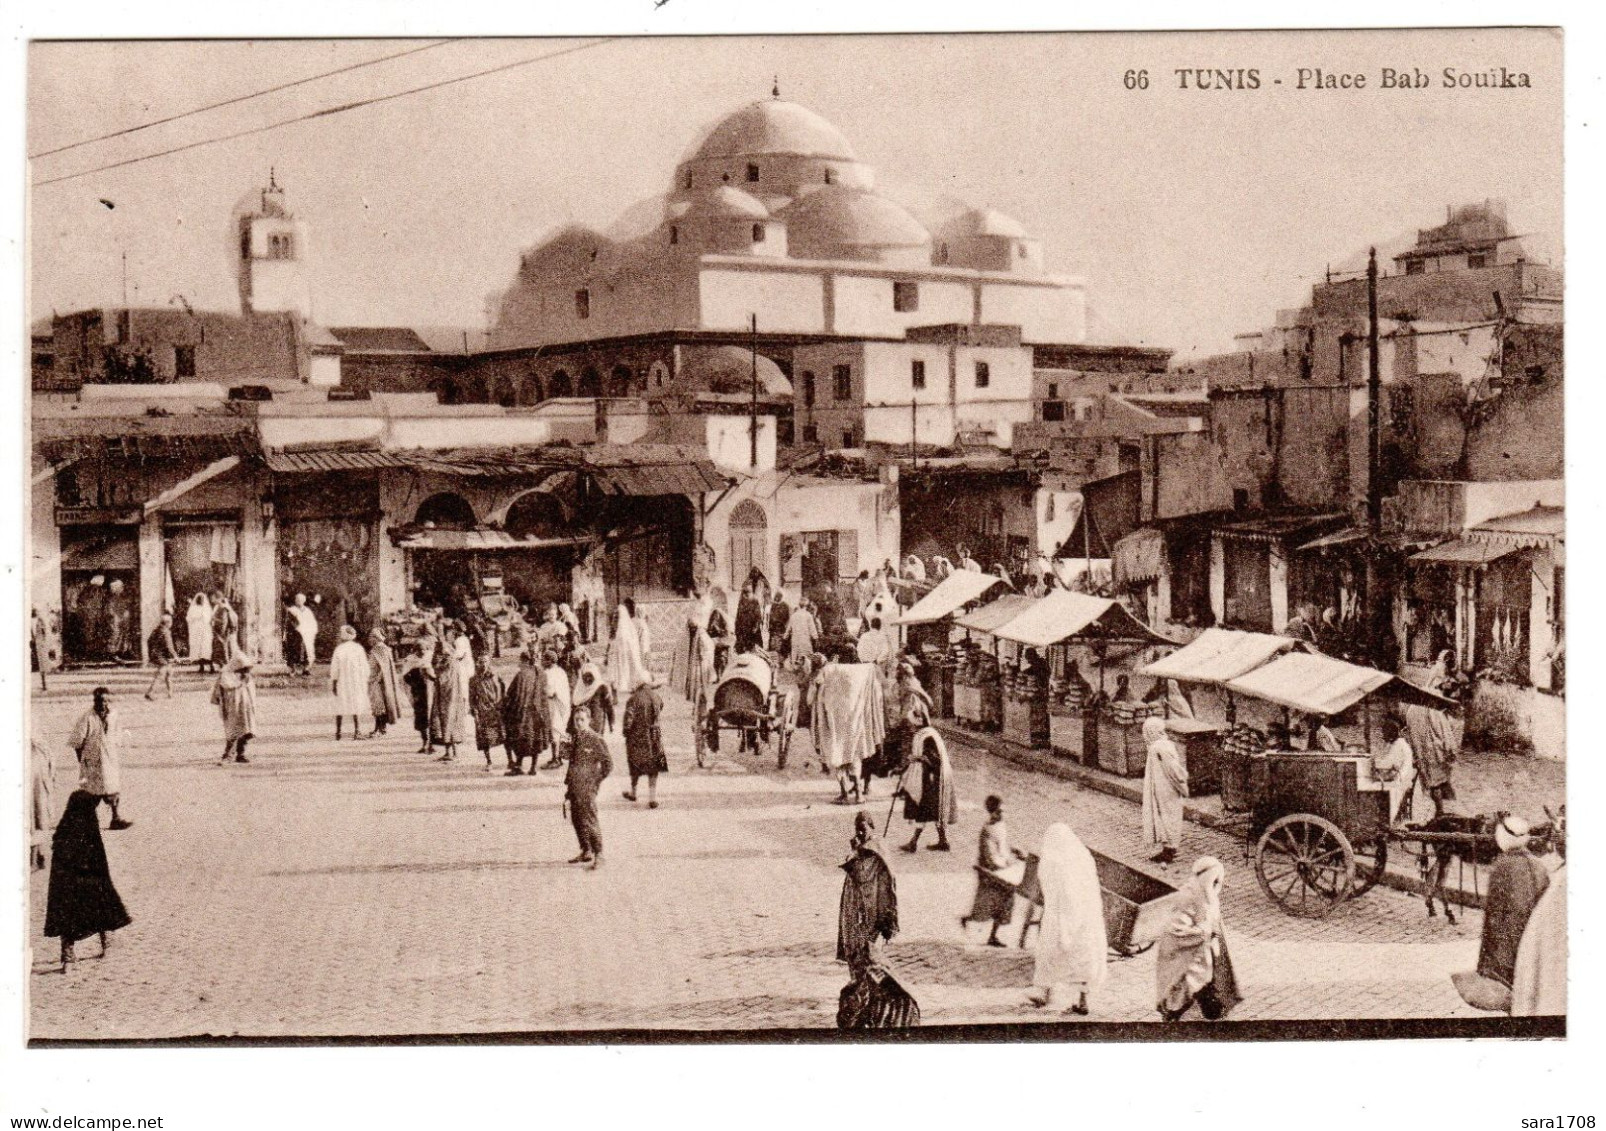 TUNIS, Place Bab Souïka. - Tunisia